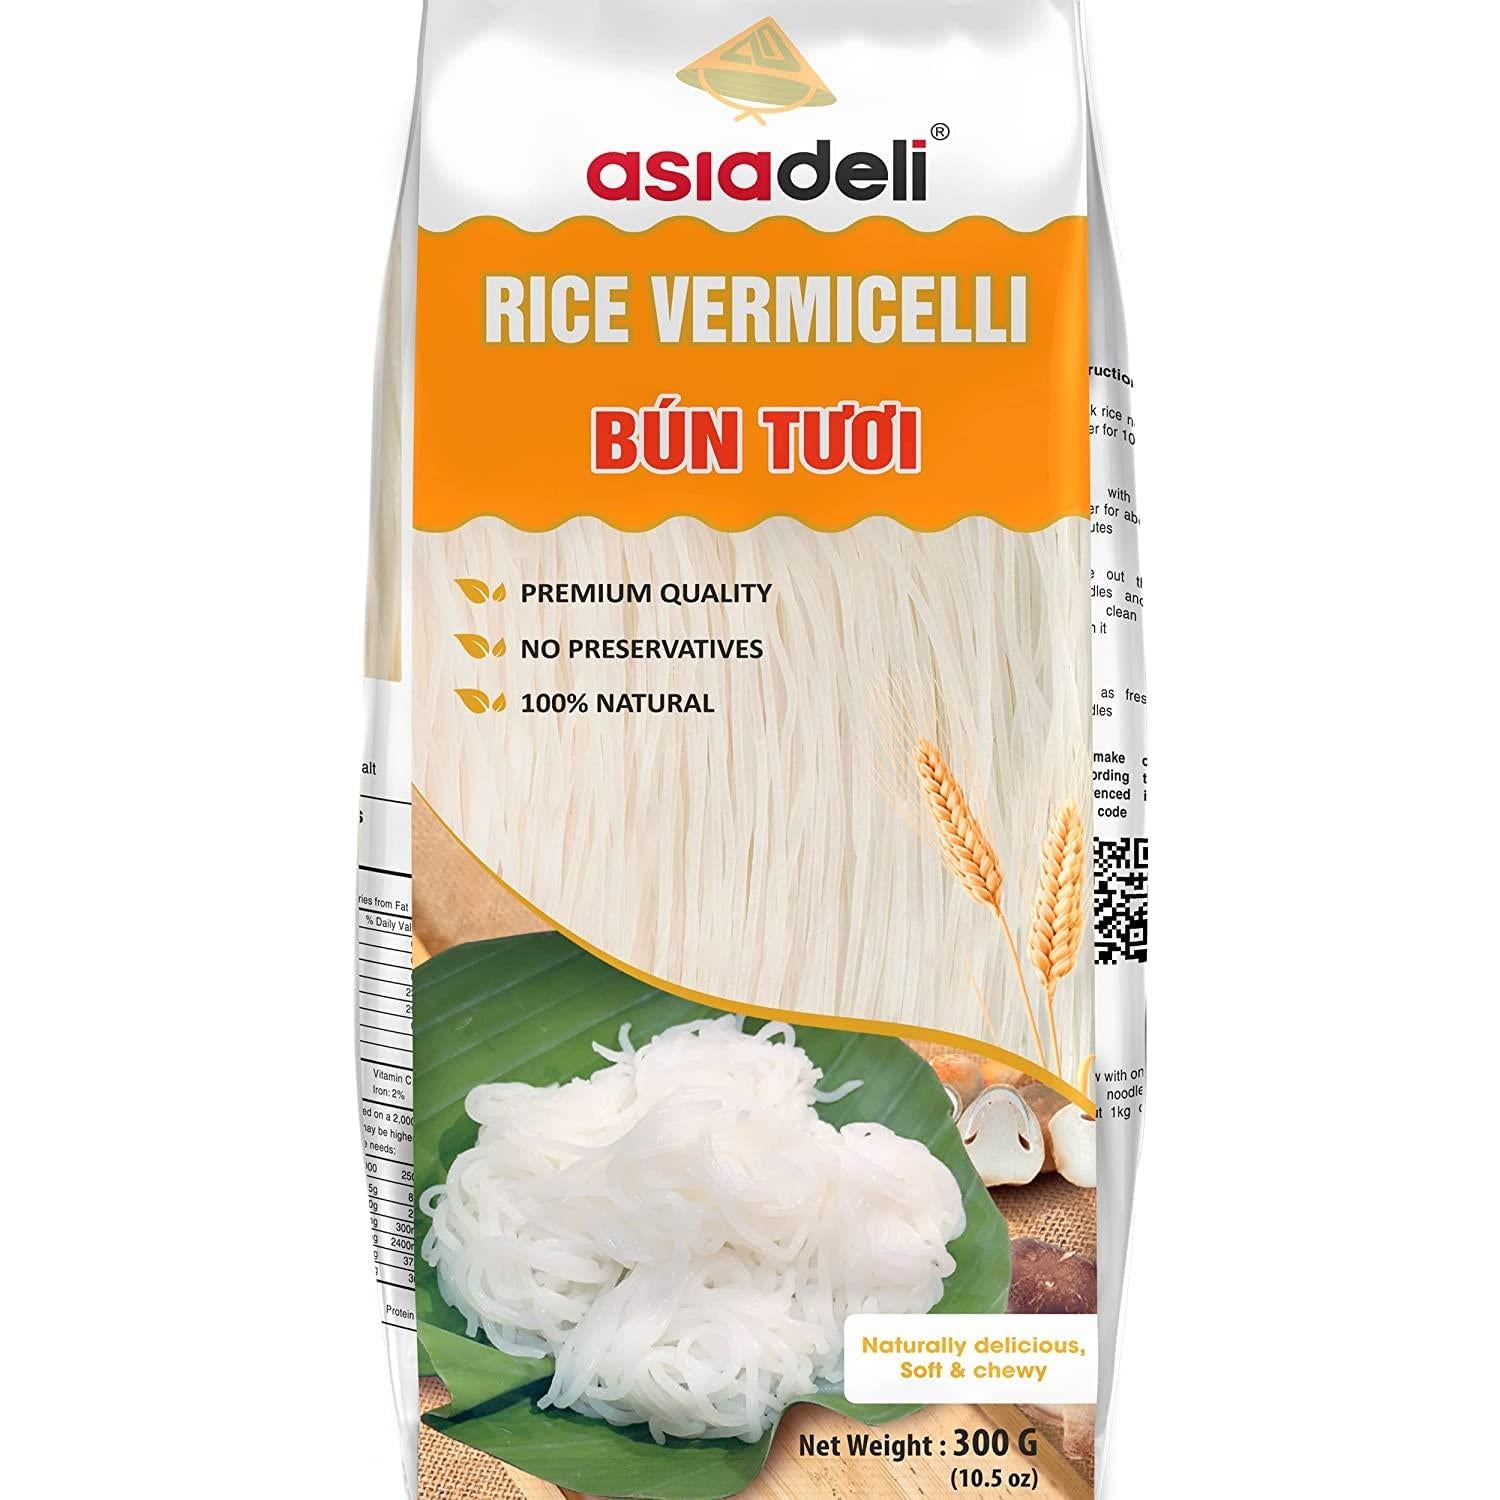 Asiadeli Rice Vermicelli, Premium Rice Noodles, Vietnamese Bun Tuoi for Asian Food - 10.5 oz. (Pack of 6 Bags)